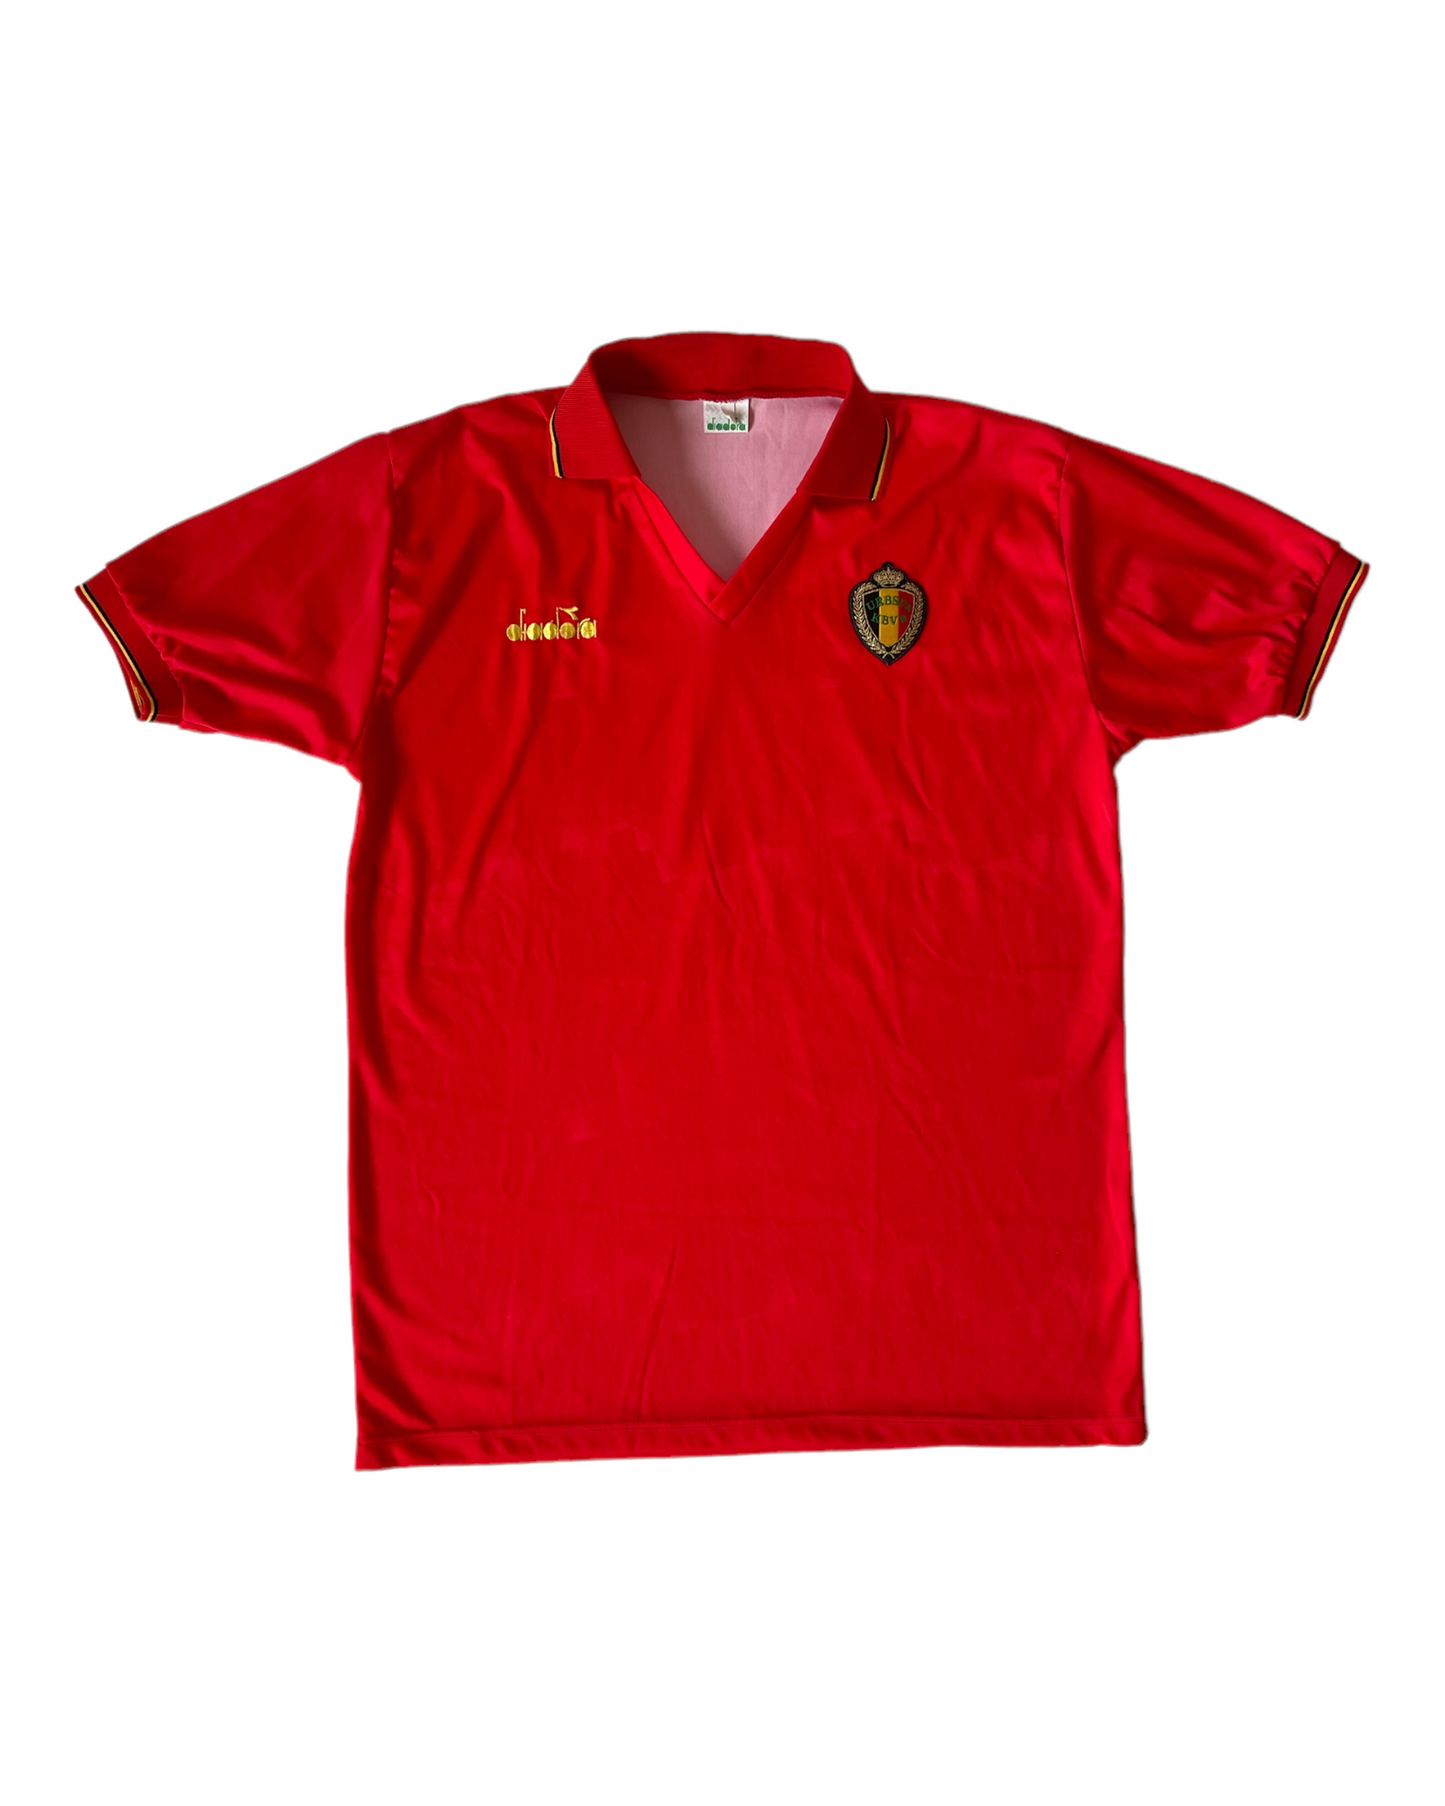 Vintage Belgium Diadora 1992-1993 Home Football Shirt Size L Red URBSFA KBVB